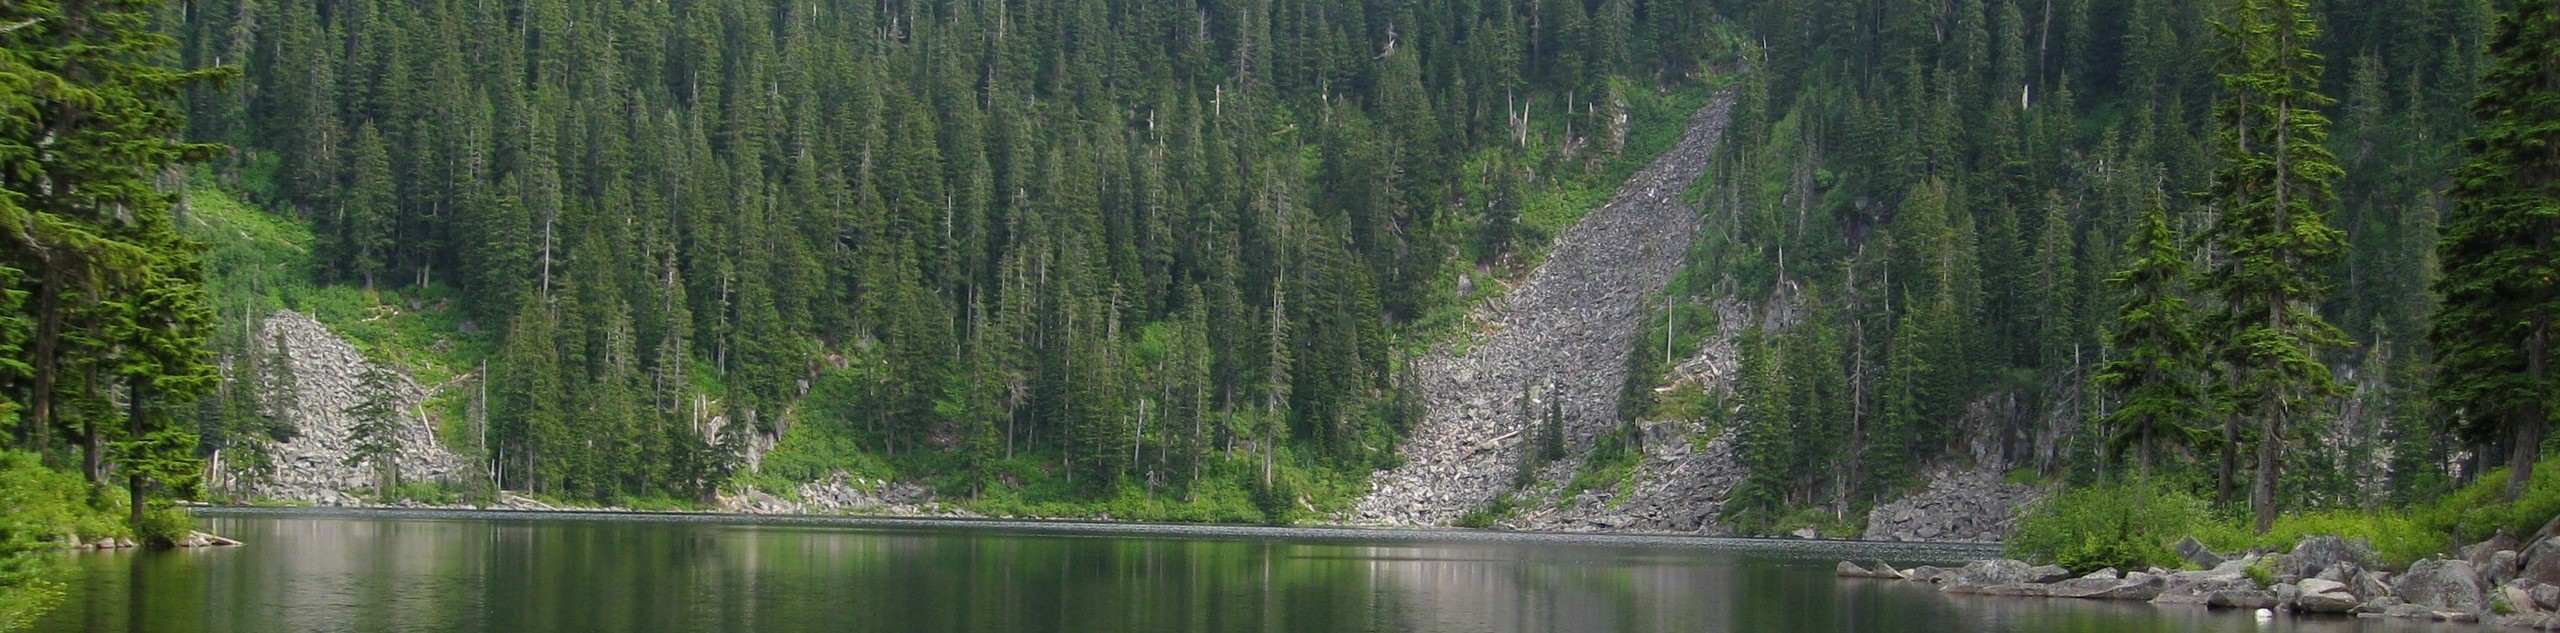 Mason Lake via Ira Spring Trail